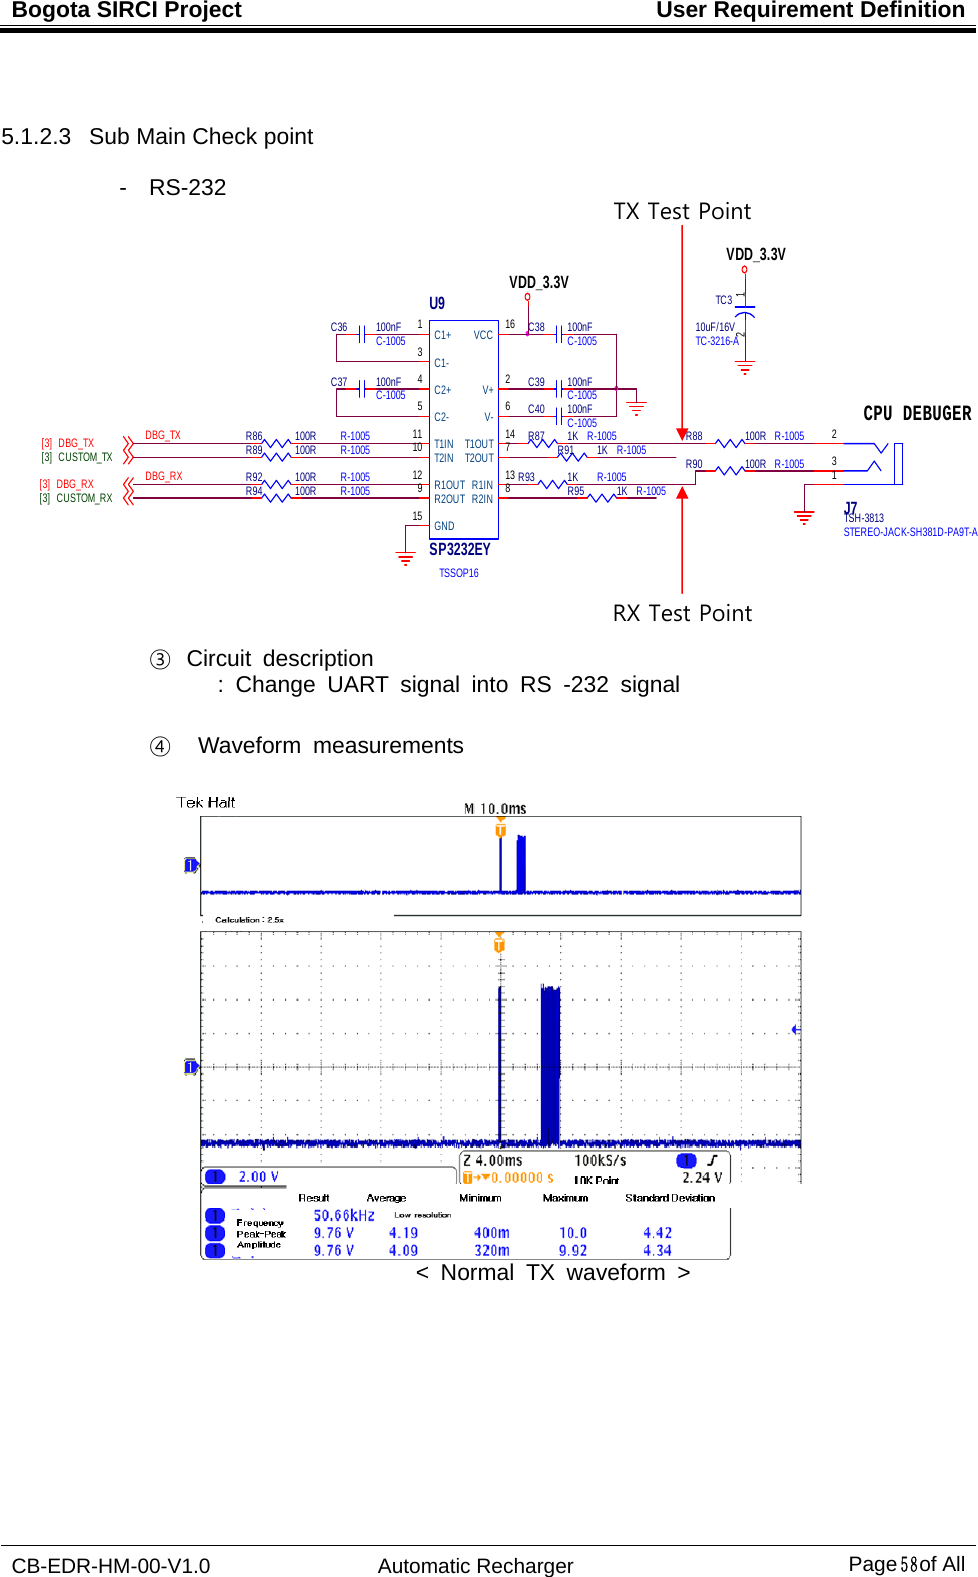 Bogota SIRCI Project  User Requirement Definition CB-EDR-HM-00-V1.0 Automatic Recharger Page５８ of All  5.1.2.3   Sub Main Check point - RS-232     ③ Circuit description   : Change UART signal into RS -232 signal  ④  Waveform measurements        &lt; Normal TX waveform &gt; CUSTOM_RX[3]VDD_3.3VTC310uF/16VTC-3216-A12CUSTOM_TX[3]VDD_3.3VR91 1K R-1005 R88 100R R-1005R95 1K R-1005R90 100R R-1005C39 100nFC-1005CPU DEBUGERDBG_TX[3] DBG_TXDBG_RX[3] DBG_RXJ7TSH-3813STEREO-JACK-SH381D-PA9T-A231C37 100nFC-1005C38 100nFC-1005R86 100R R-1005R92 100R R-1005R87 1K R-1005C36 100nFC-1005R93 1K R-1005U9SP3232EYTSSOP16C1+1C1-3C2+4C2-5T1IN11T2IN10R1OUT12R2OUT9GND15T1OUT 14T2OUT 7R1IN 13R2IN 8VCC 16V- 6V+ 2R89 100R R-1005R94 100R R-1005C40 100nFC-1005TX Test Point   RX Test Point   